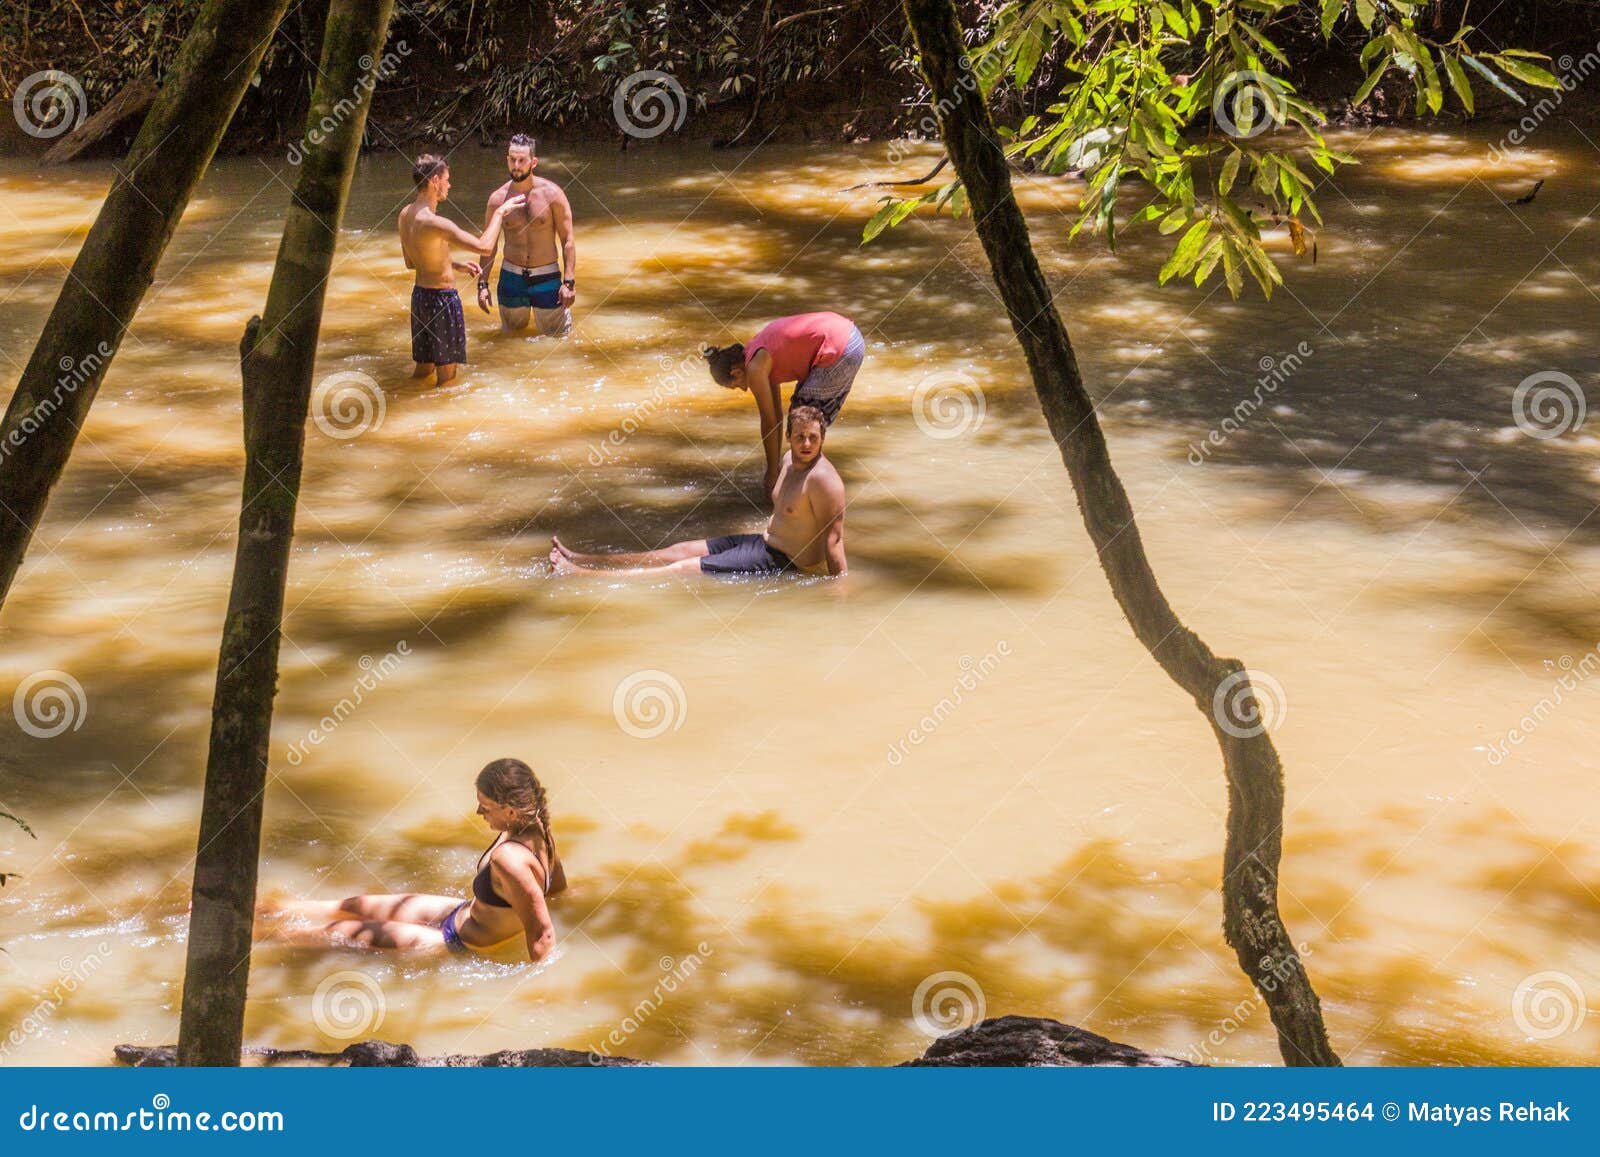 TAMAN NEGARA, MALAYSIA - MARCH 17, 2018: Tourists are Swimming in a